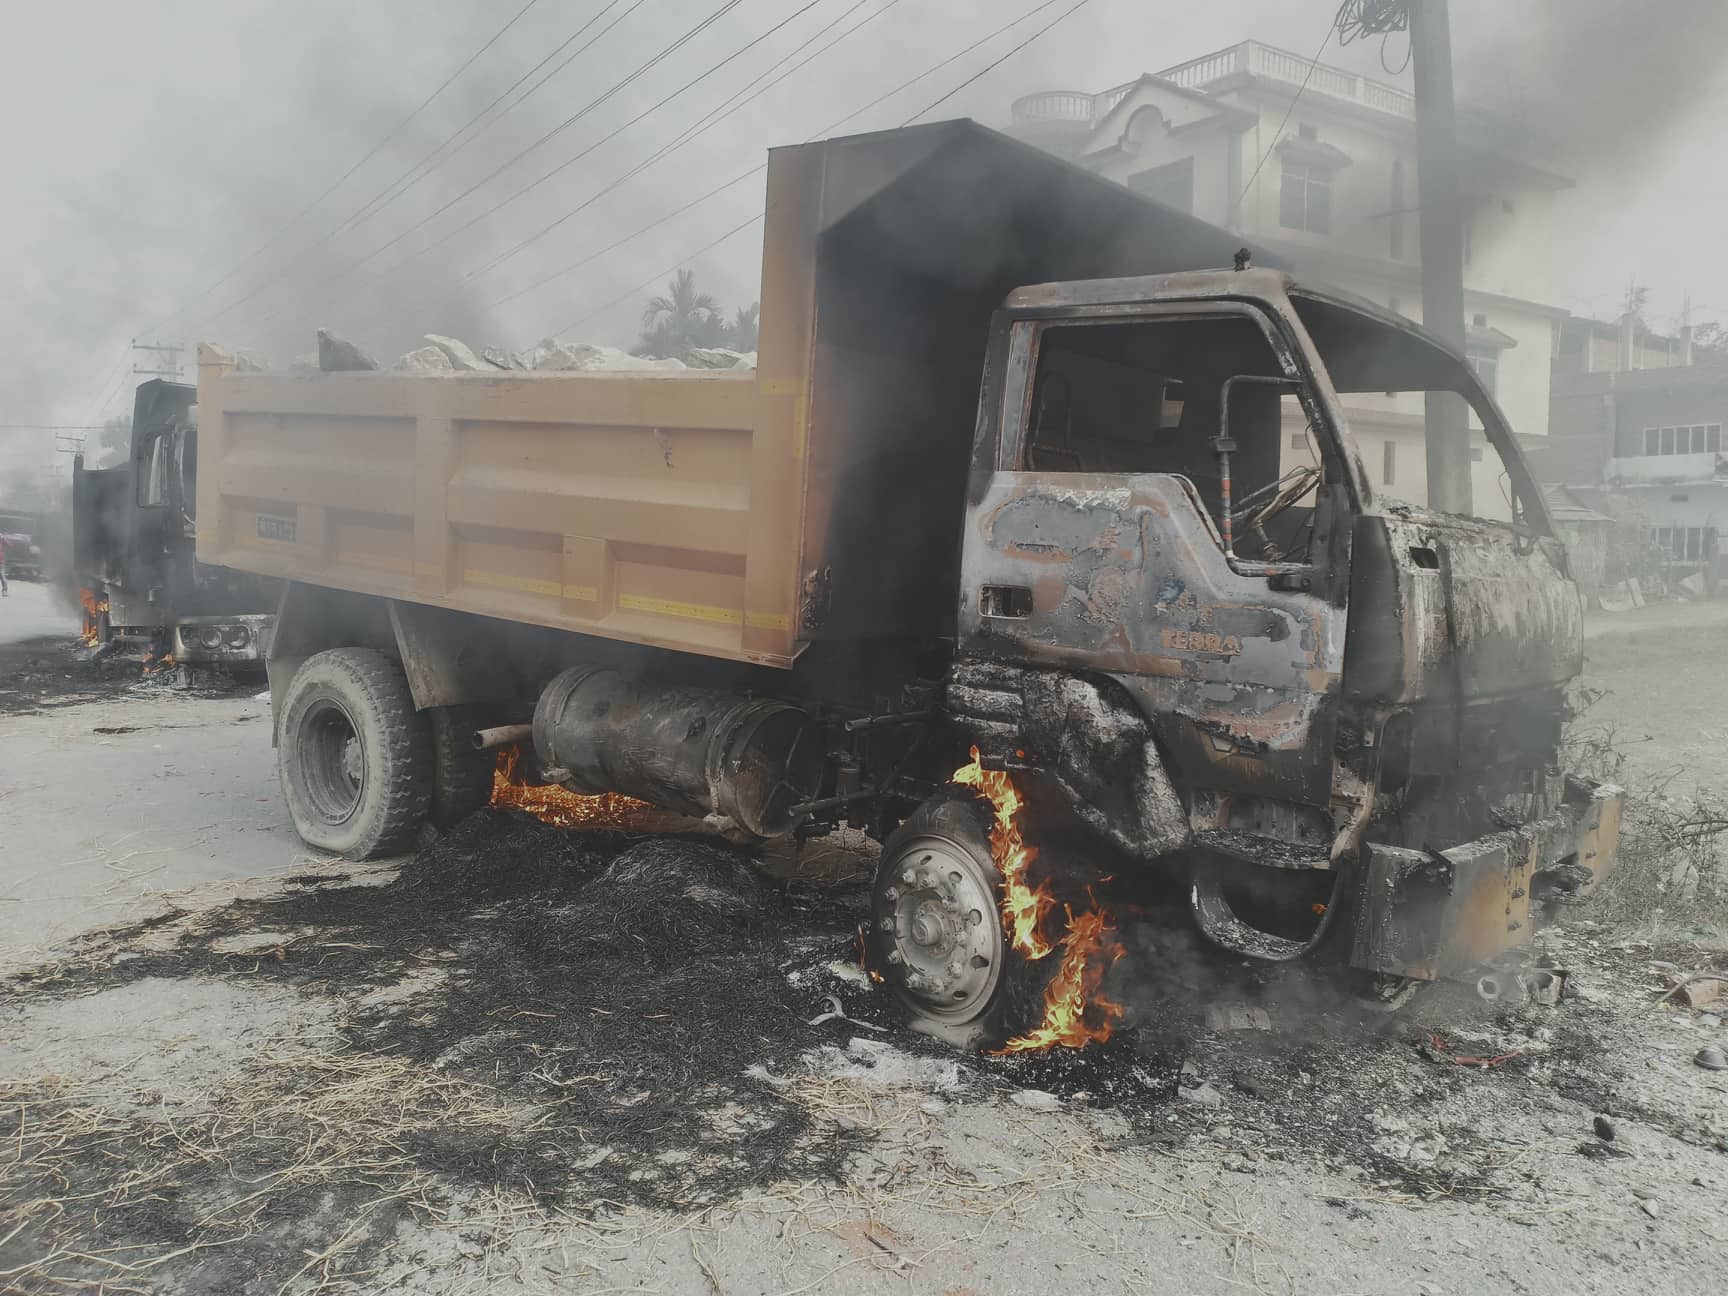 Relatives torch trucks after 11-year-old killed in Biratnagar